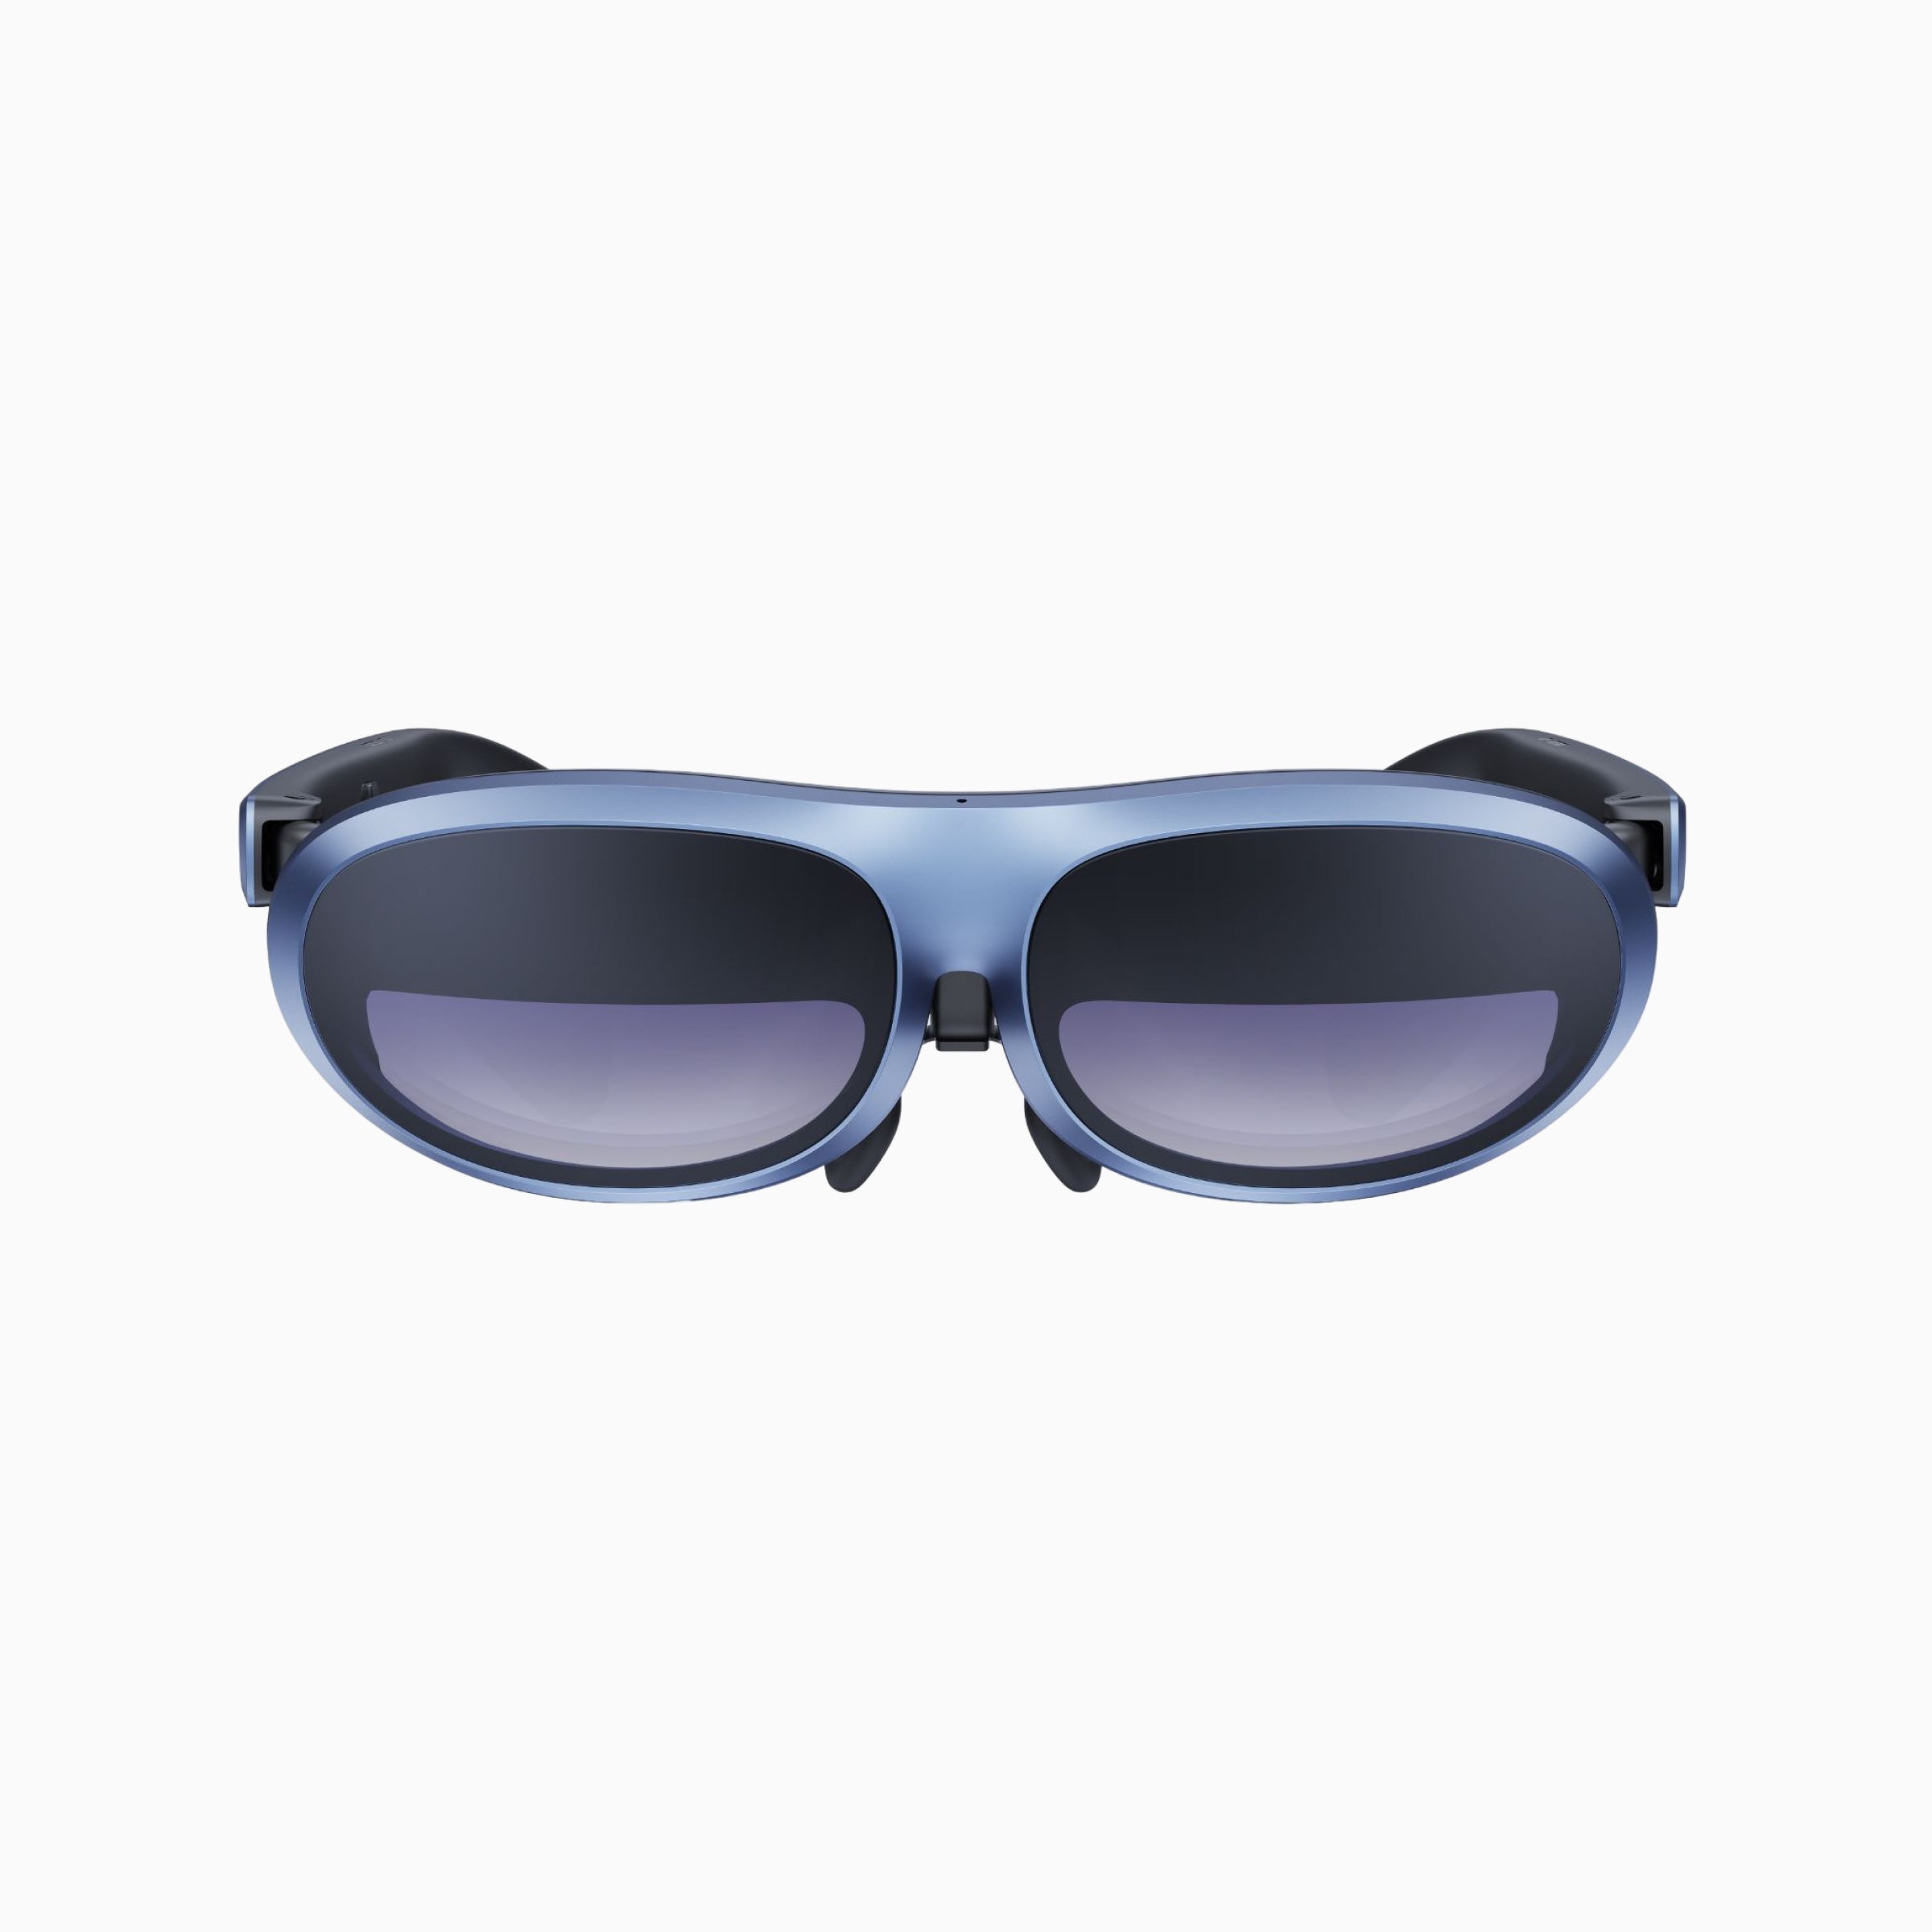 Eye Glasses Holders Around Neck Sunglasses Strap Anti Slip Black 4